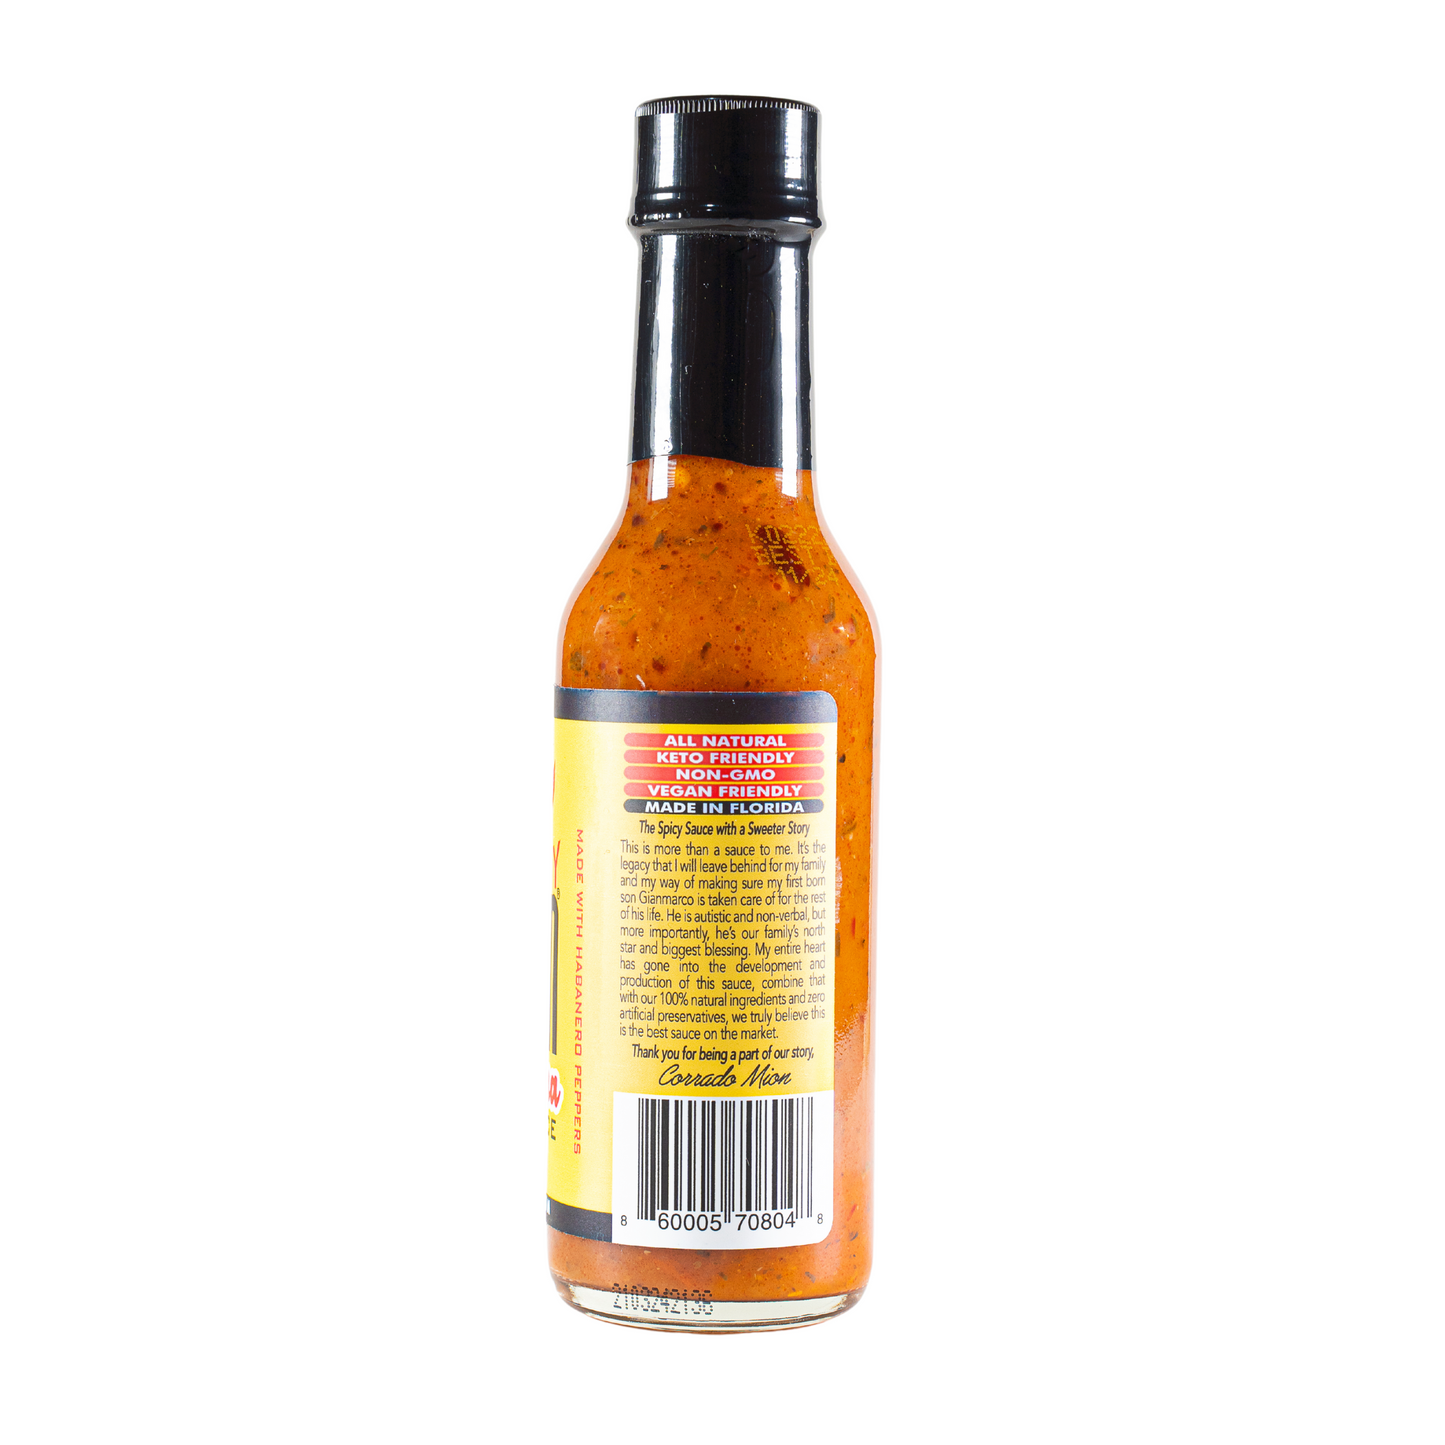 1 Spicy Mion LOUISIANA STYLE Hot Sauce - 5 FL OZ